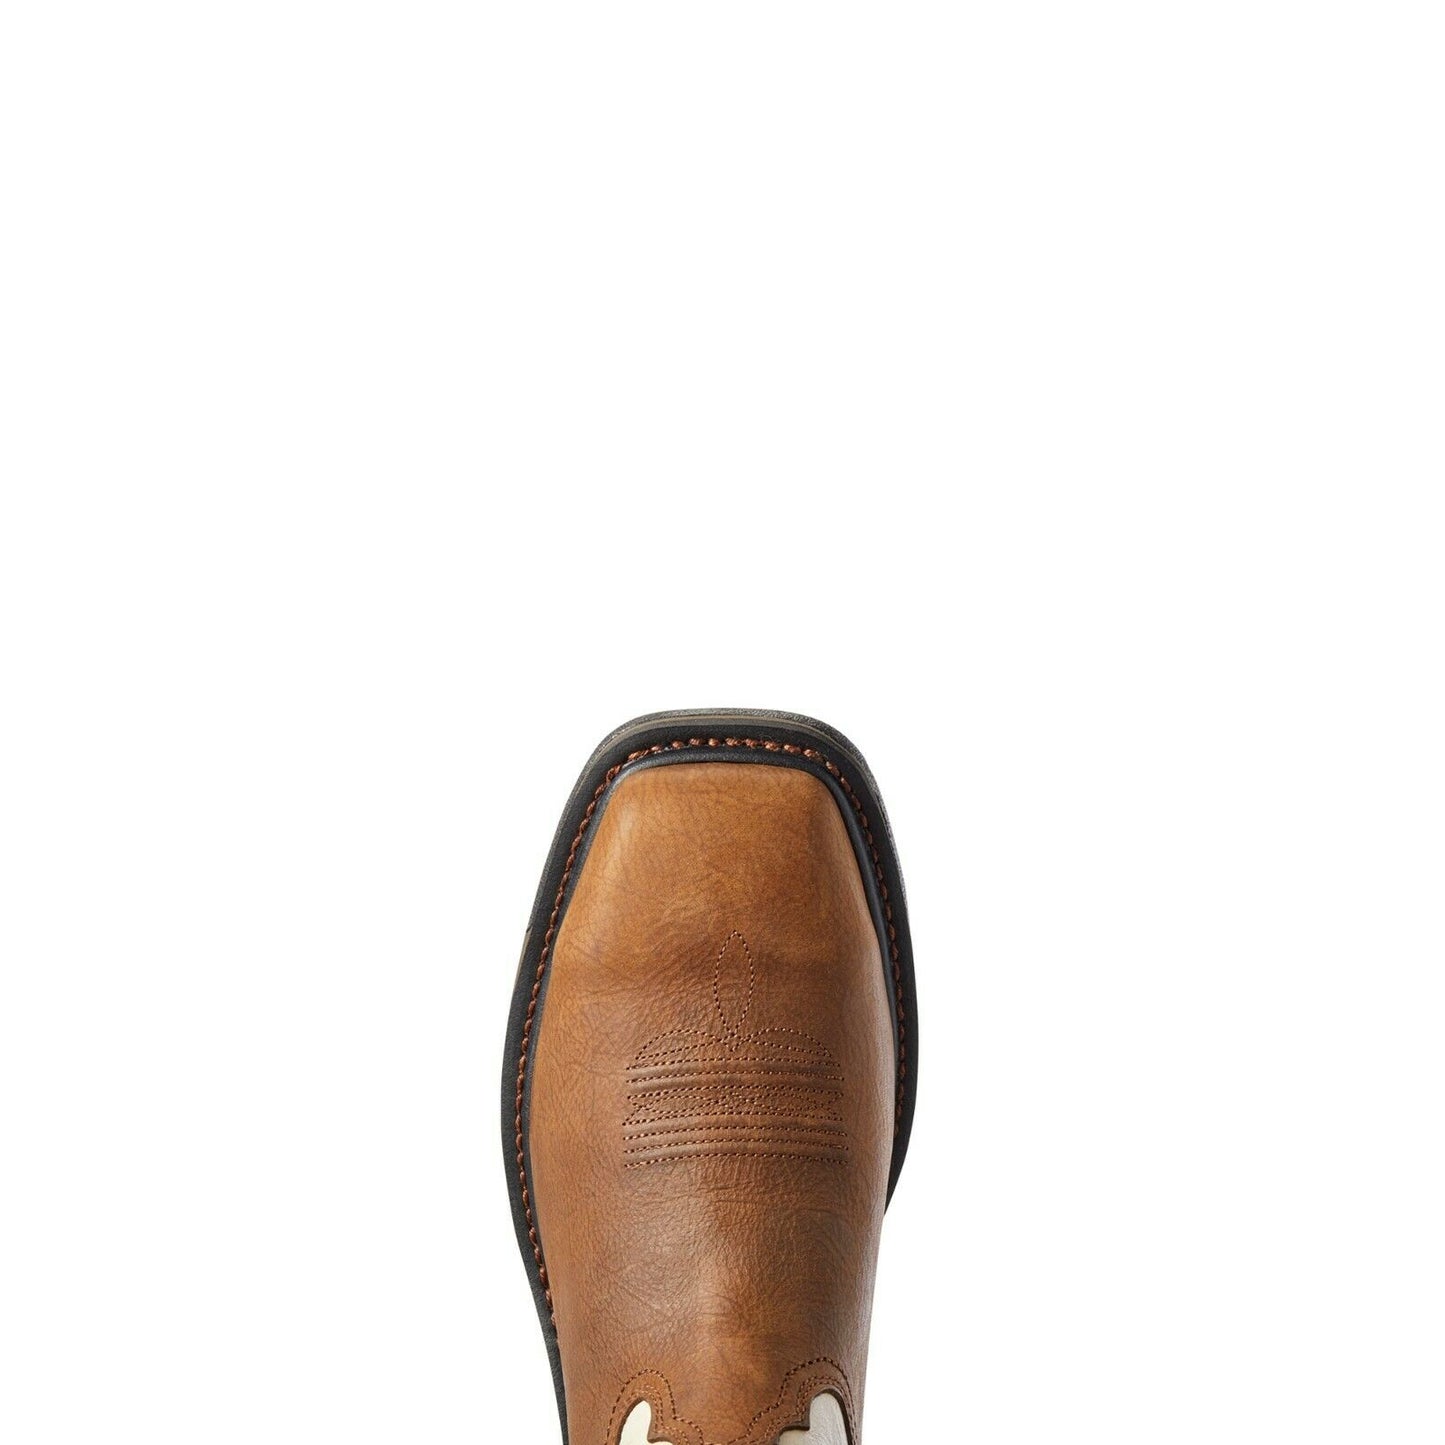 Ariat® Men's Workhog Wide Square Steel Toe Western Work Boots 10031600